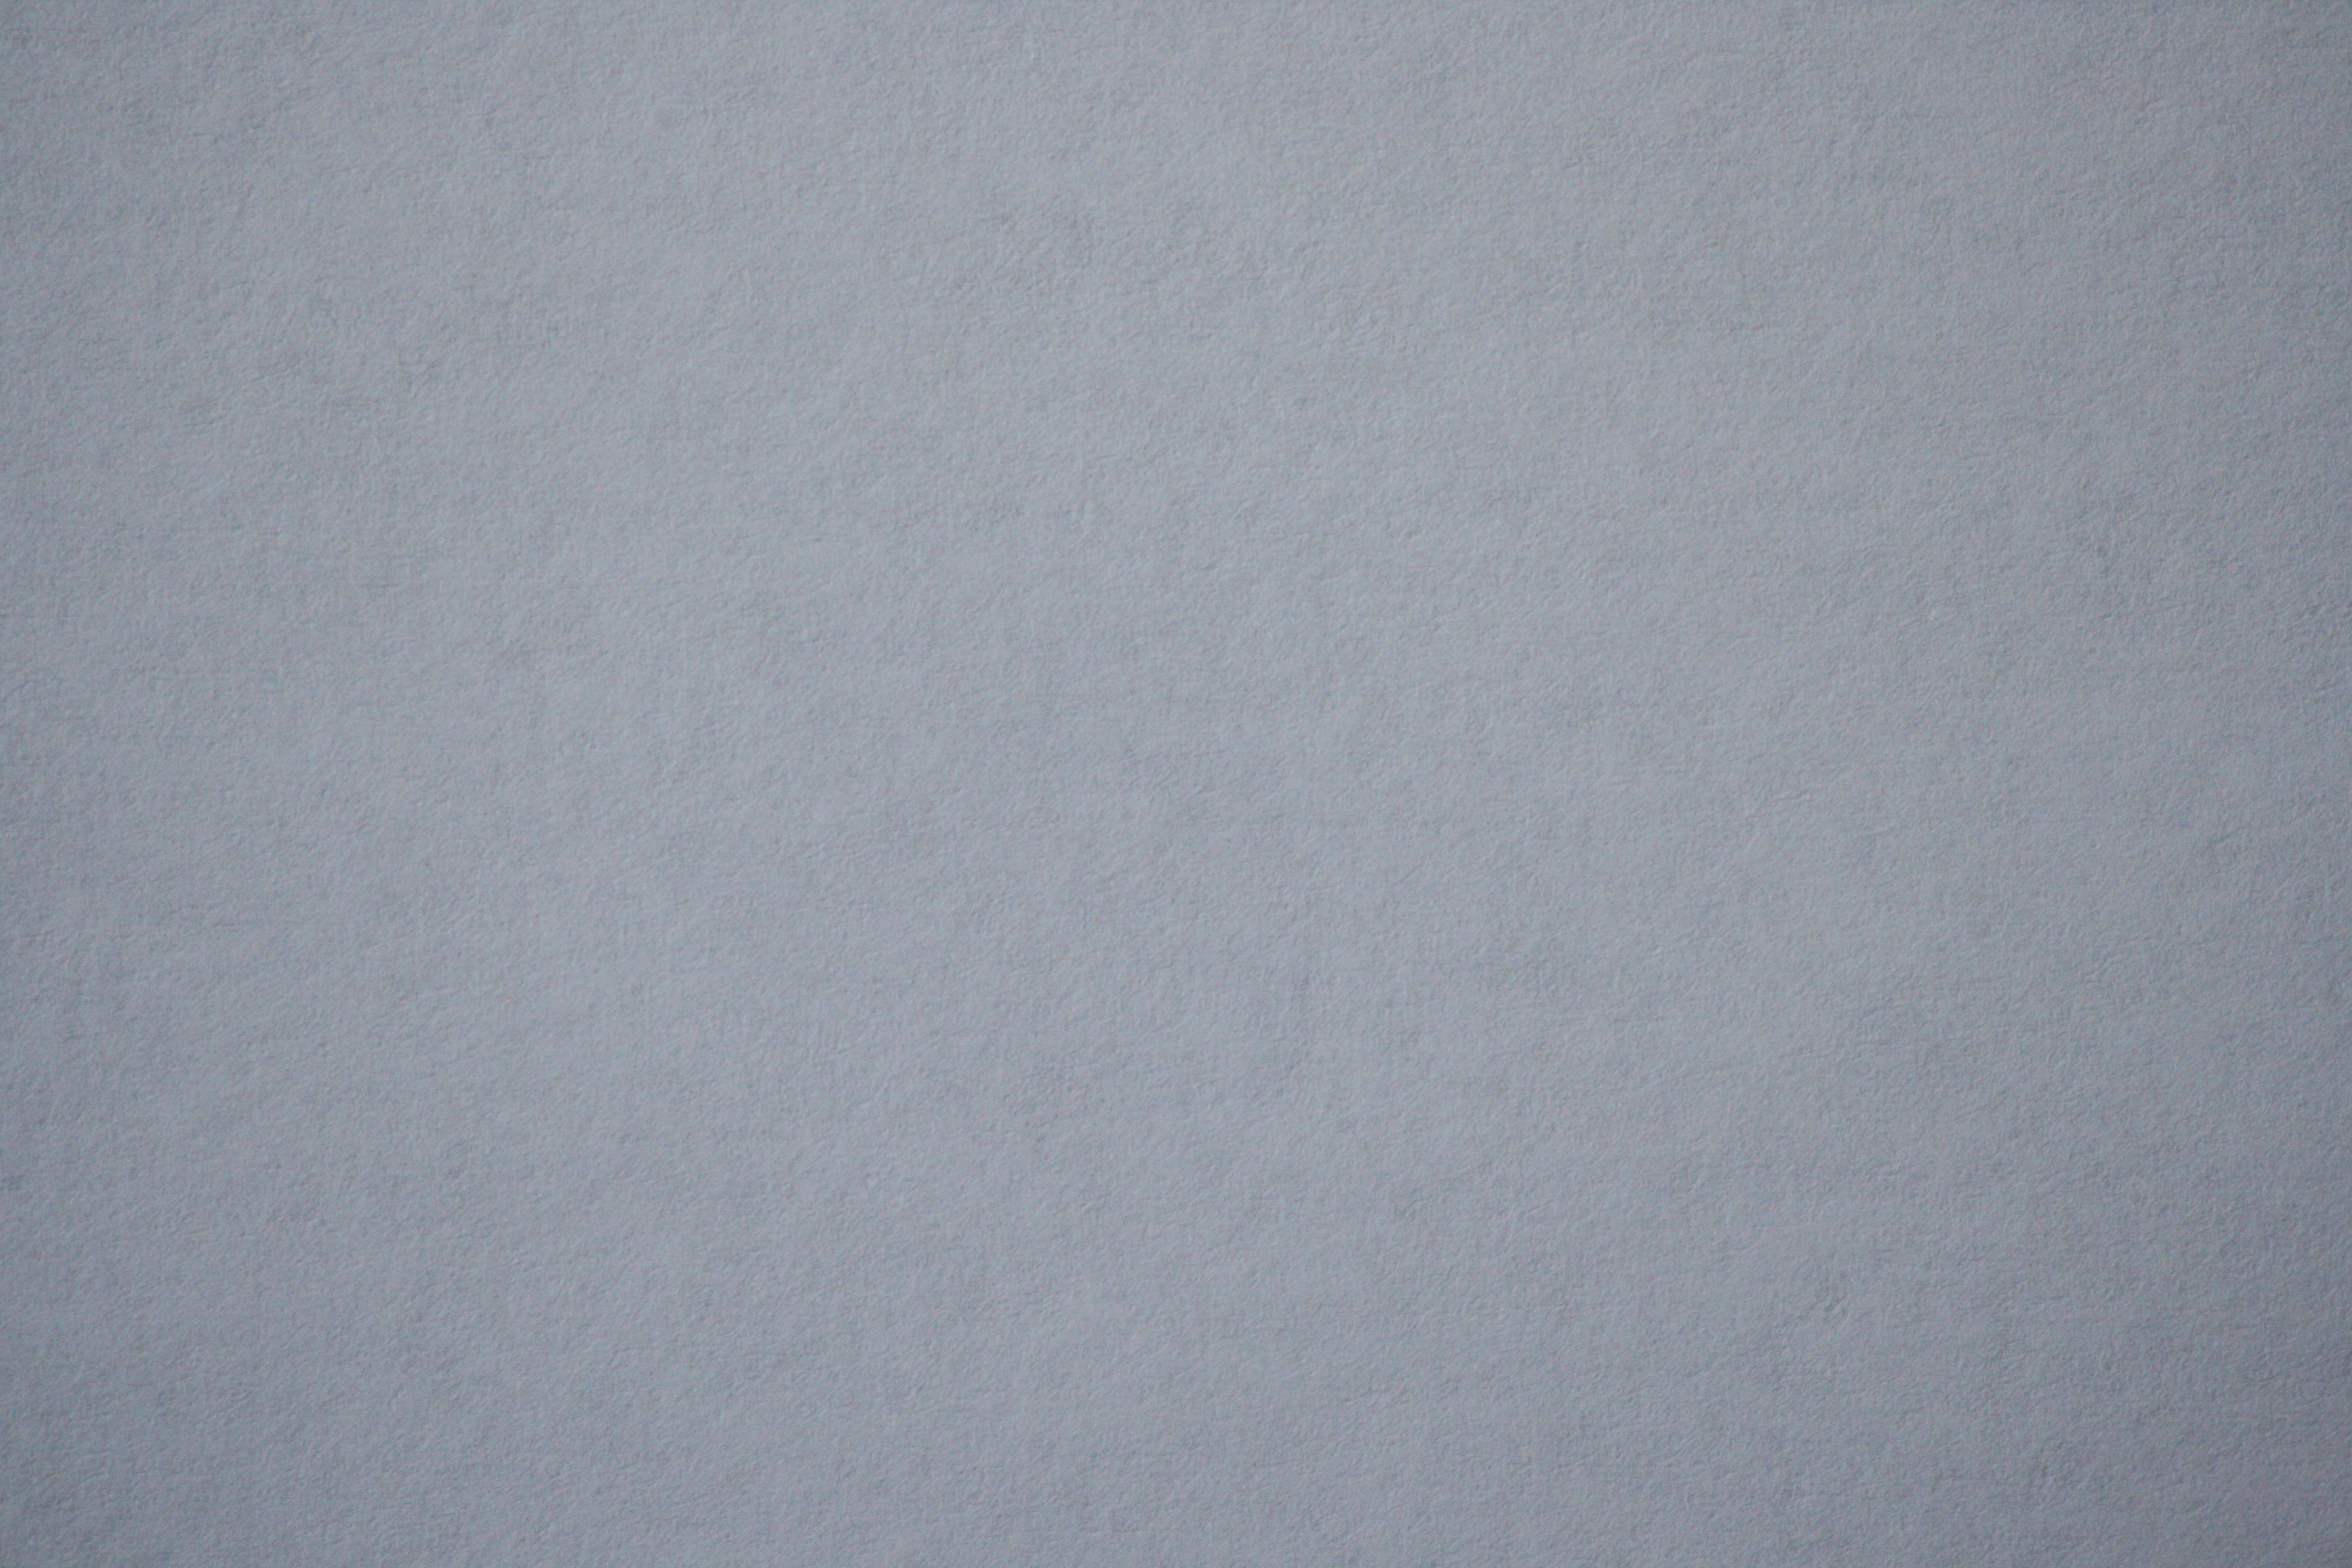 gray paper texture